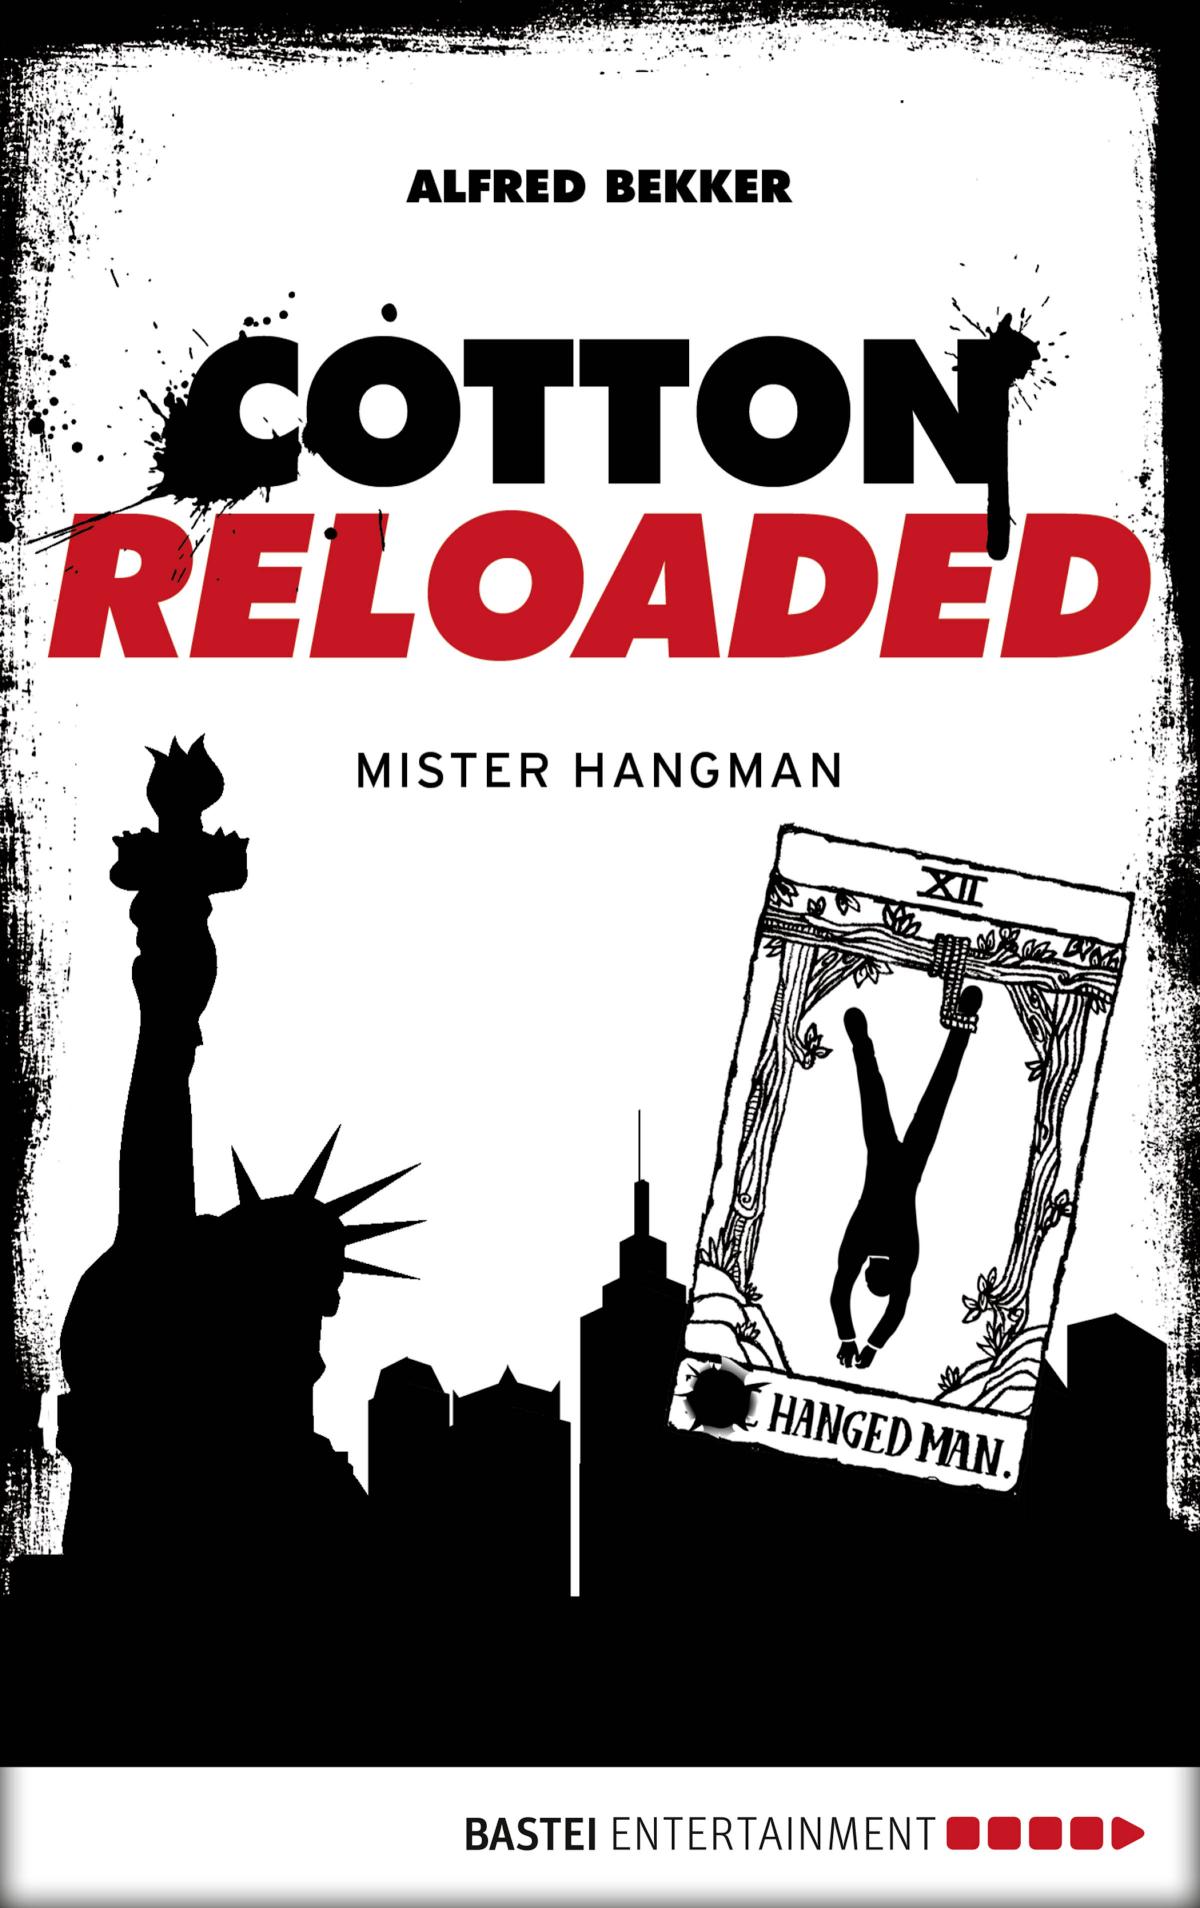 Cotton Reloaded - 48 Mister Hangman